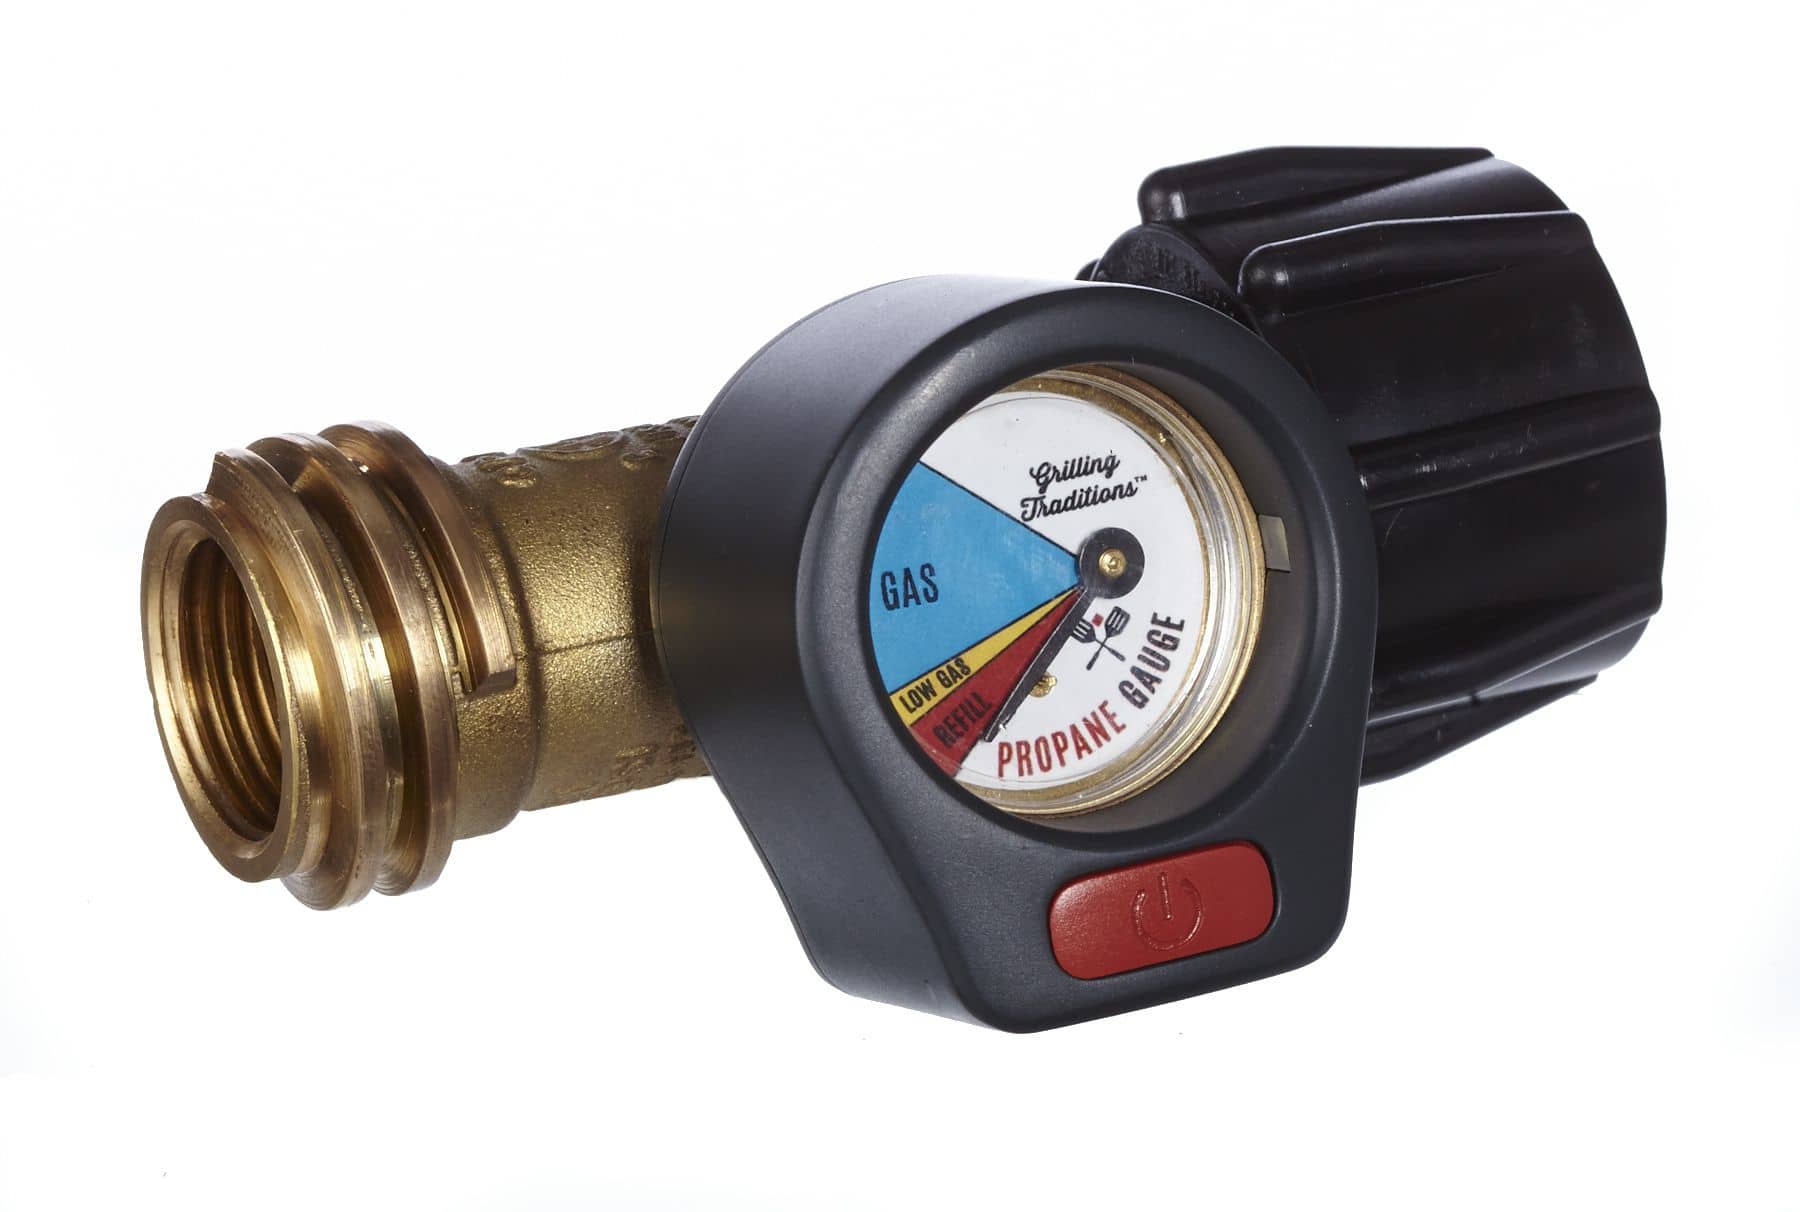 Propane Tank Brass Adapter w/ Pressure Meter Gauge for LP Gas Grill BBQ RV